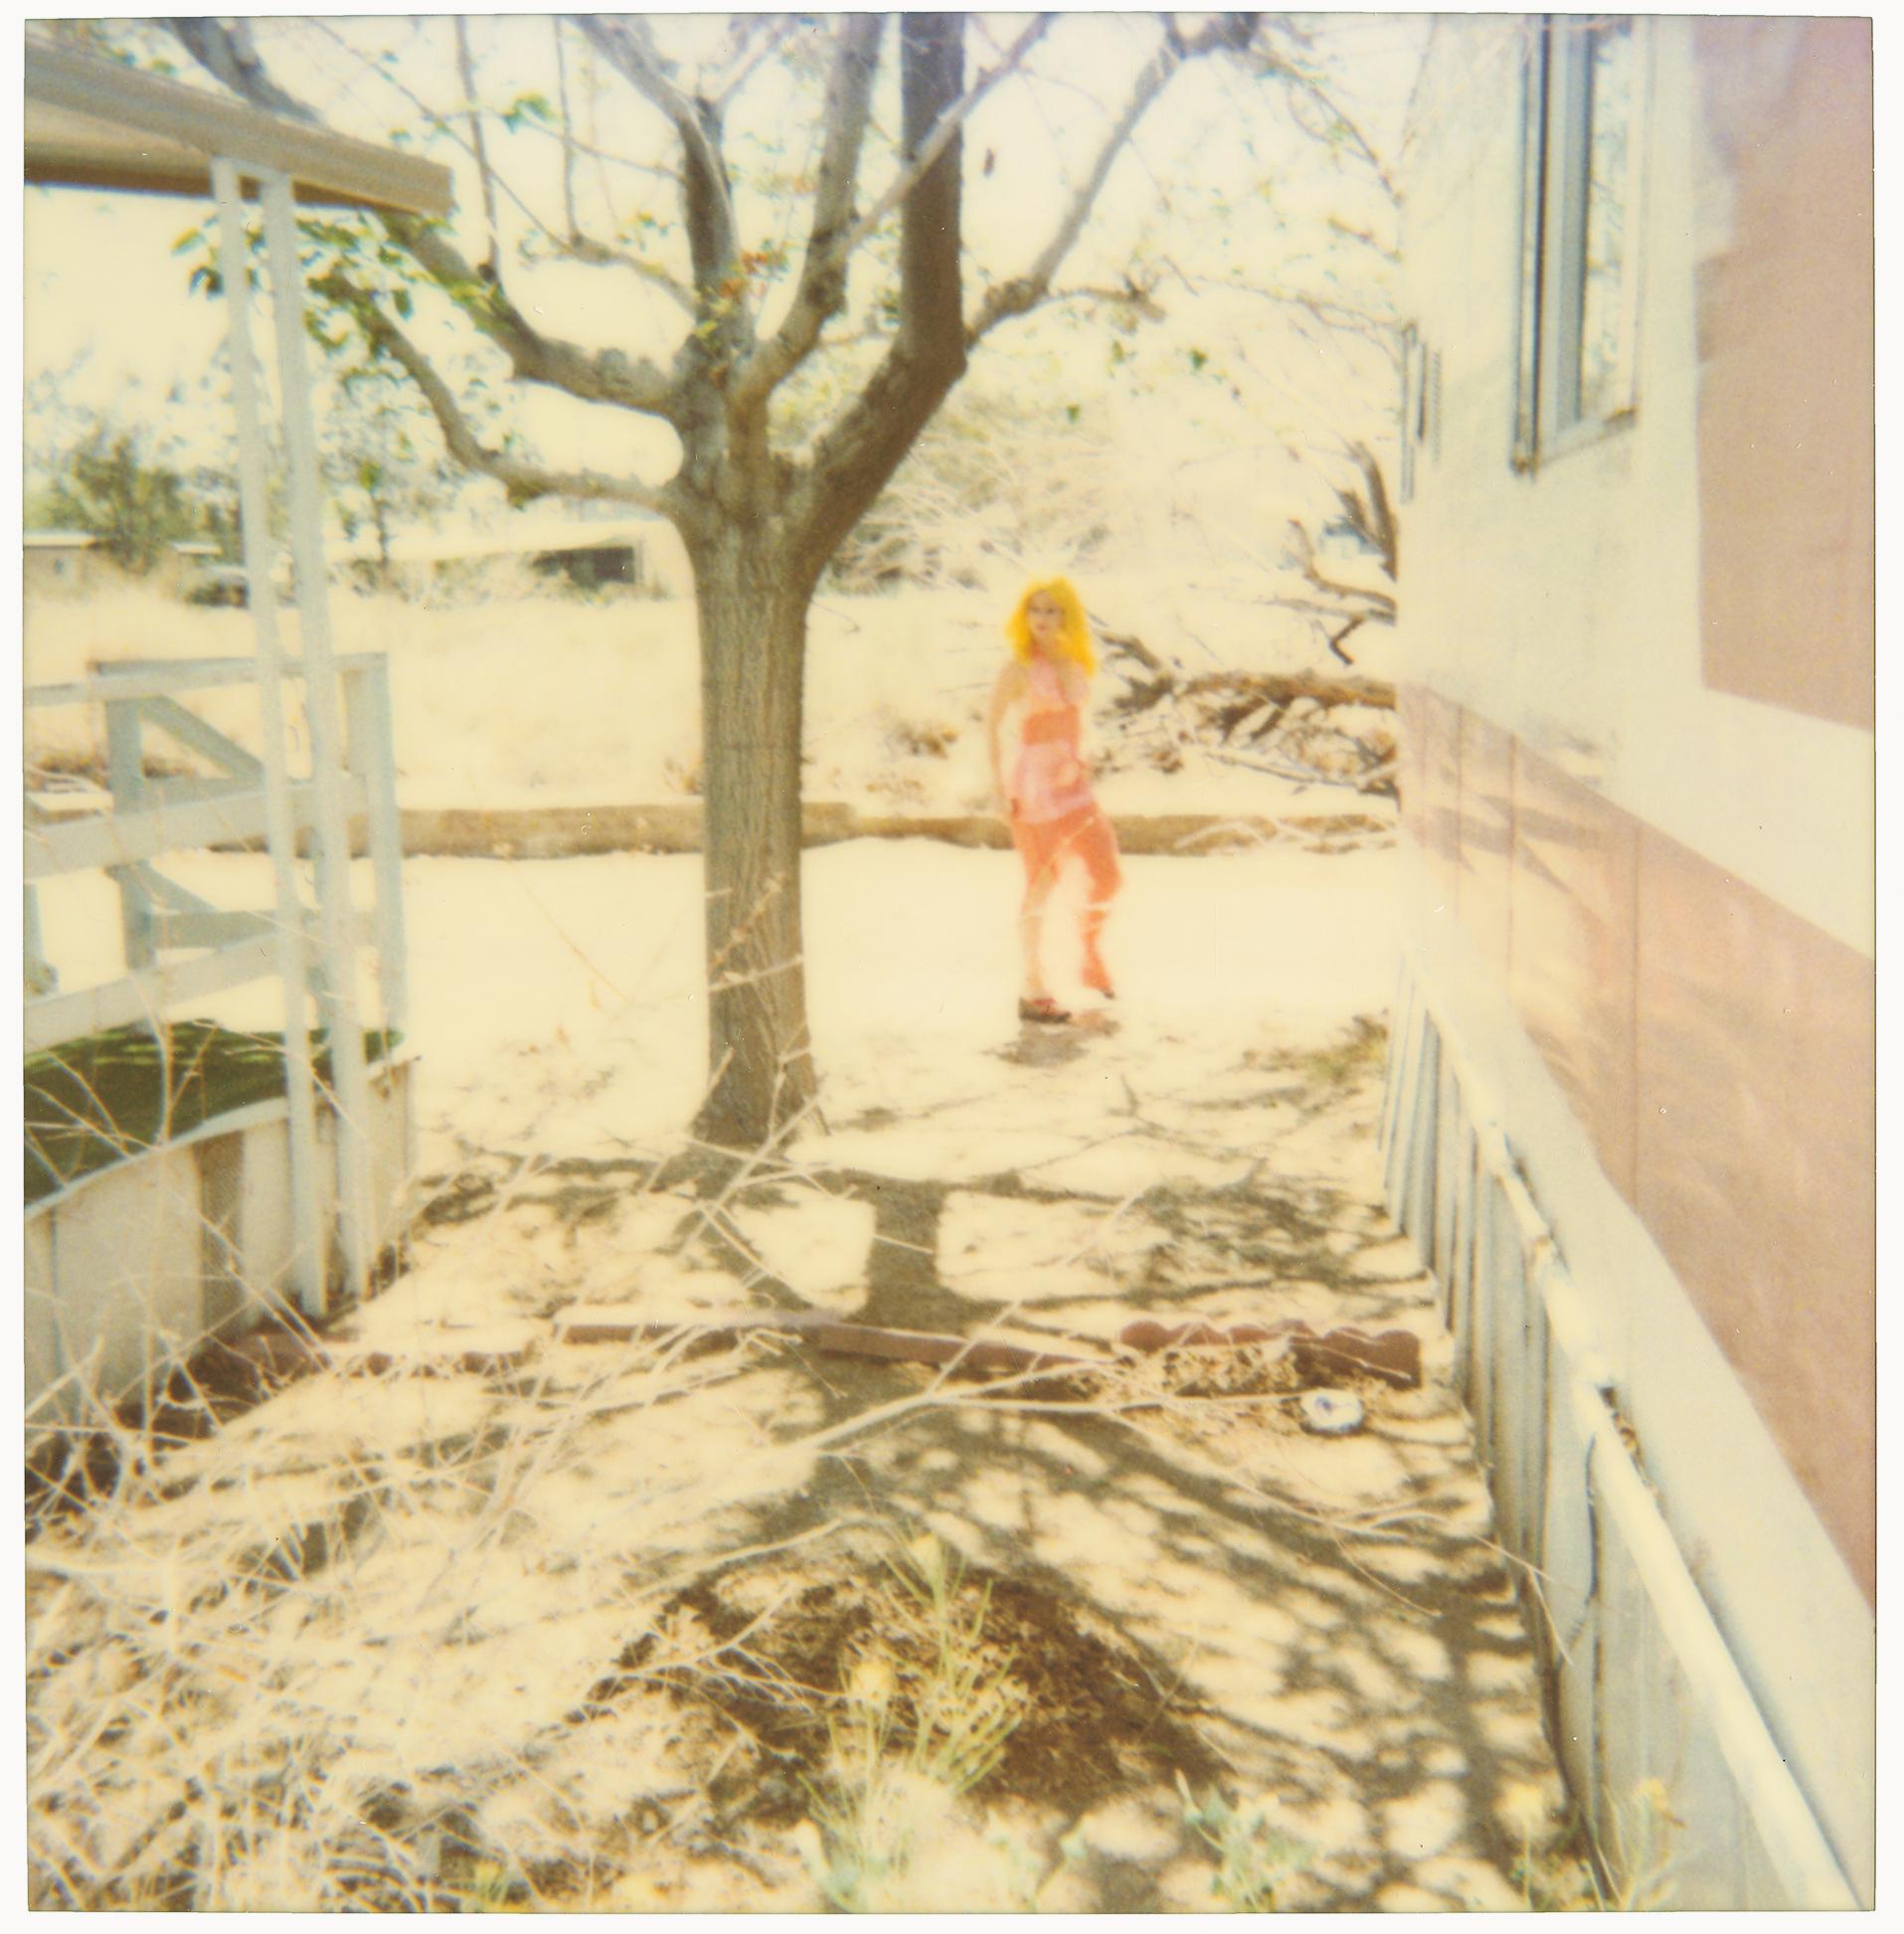 Radha and Max on Dirt Road (29 Palms, CA) - analogue, Polaroid, contemporain - Contemporain Photograph par Stefanie Schneider